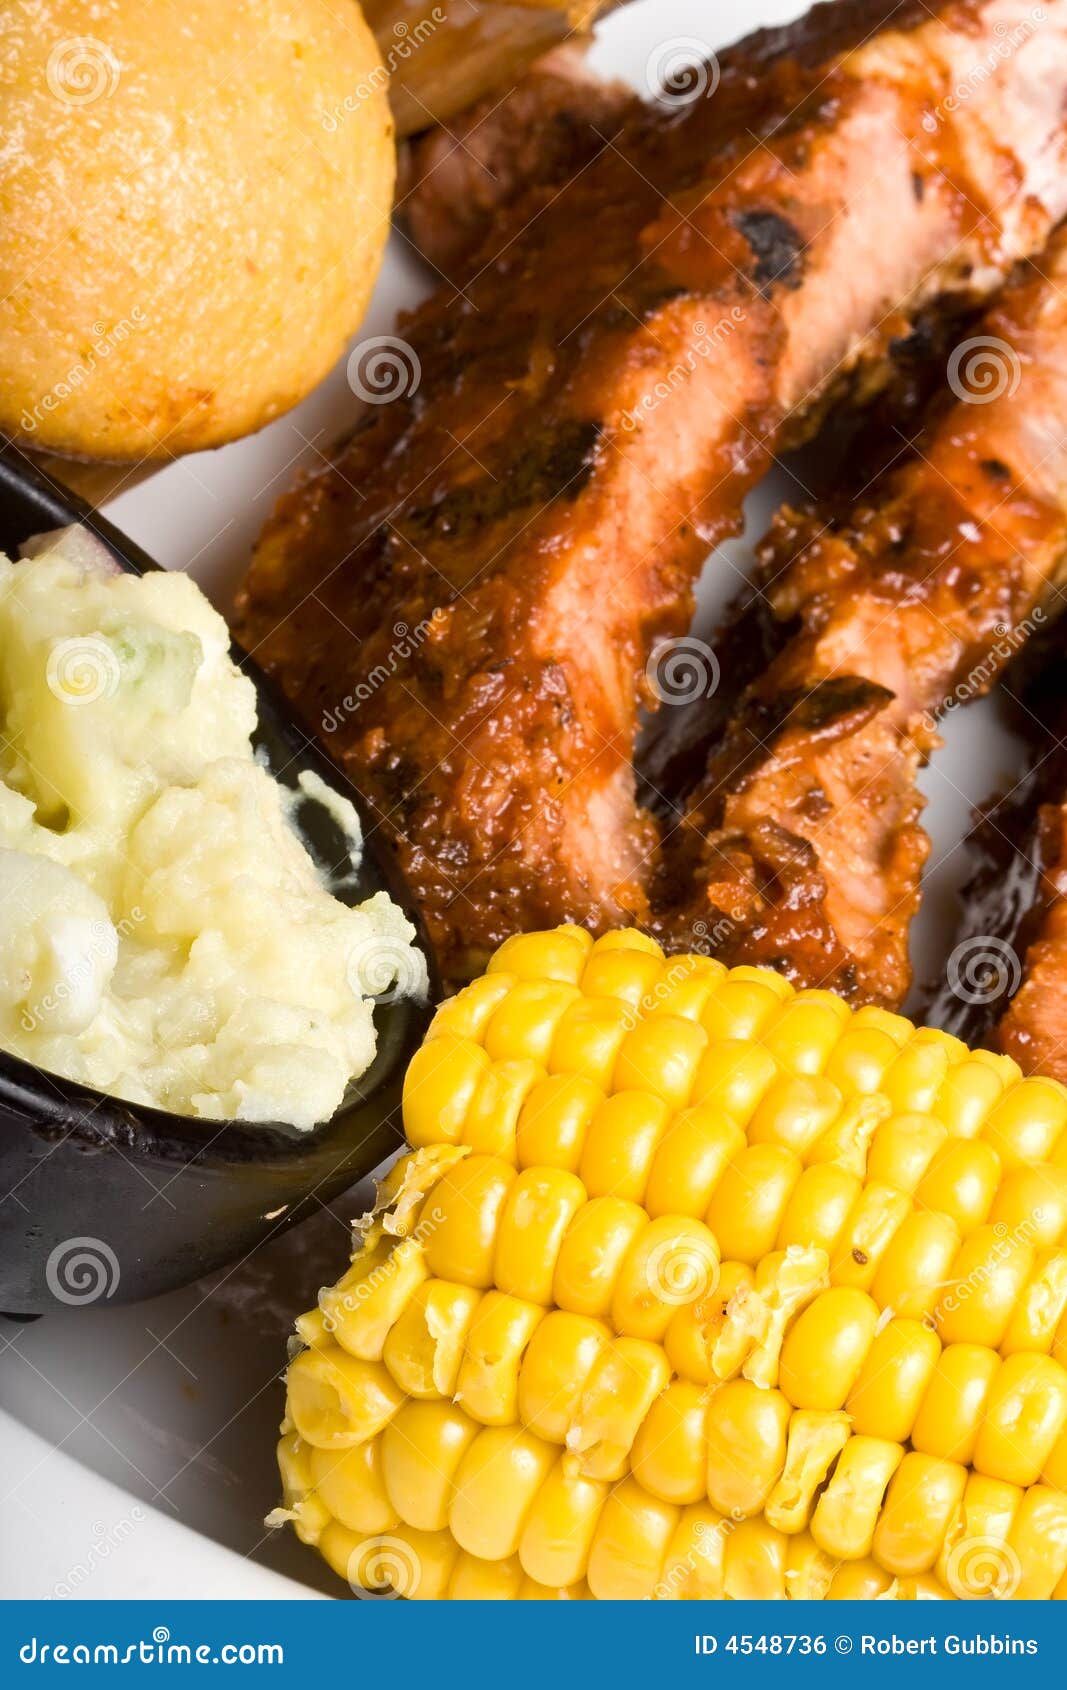 Bbq rib stock photo. Image of charred, dinner, food, juicy - 4548736